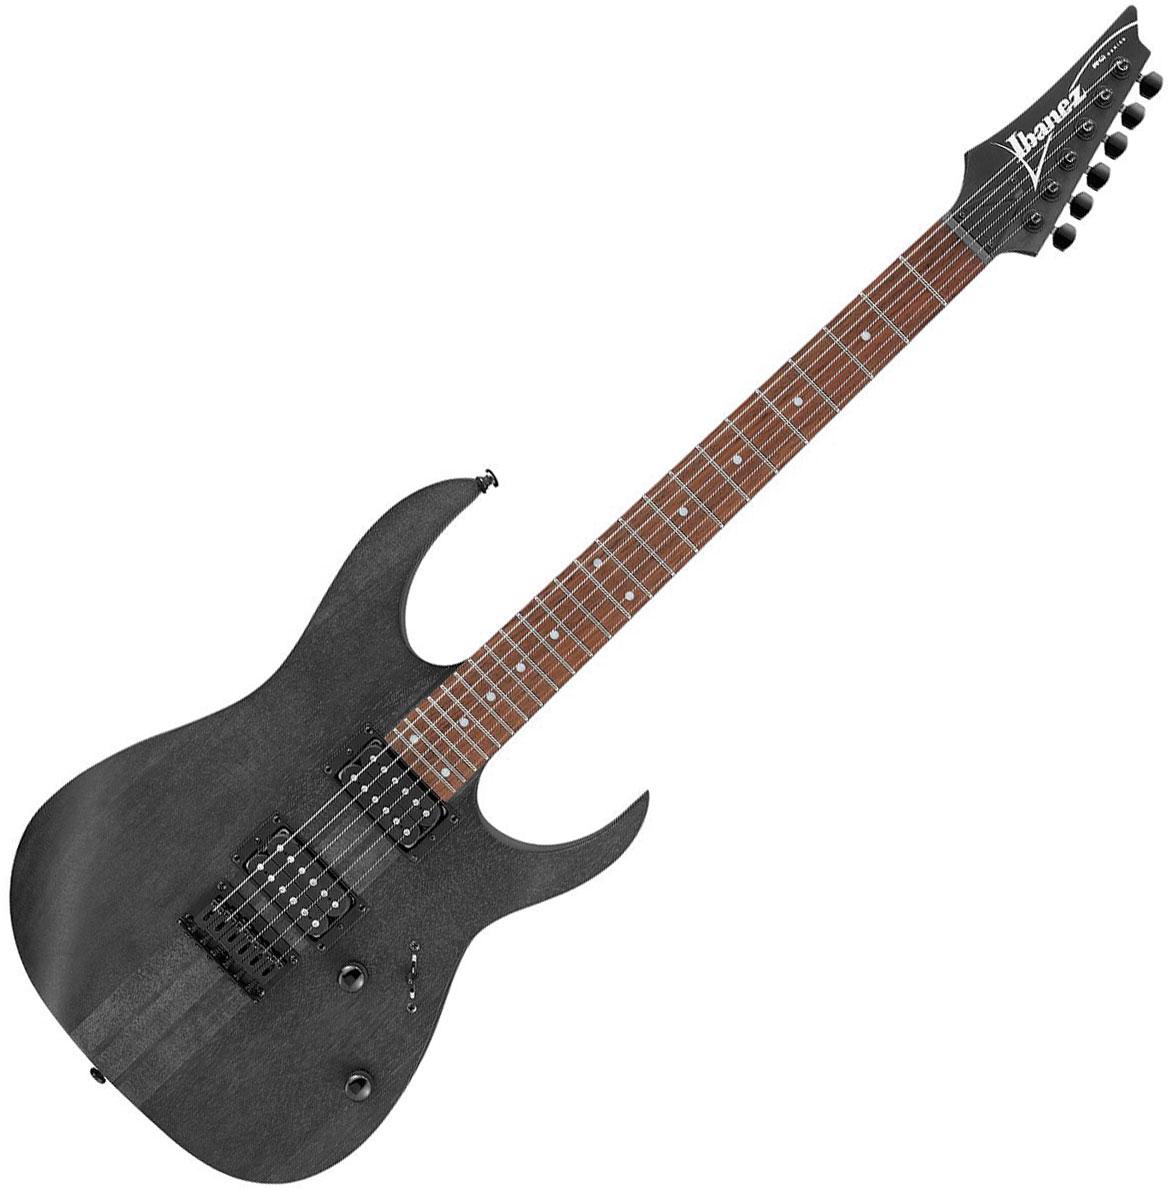 Ibañez - Guitarra Eléctrica RG, Color: Negra Mate Mod.RGRT421-WK_222